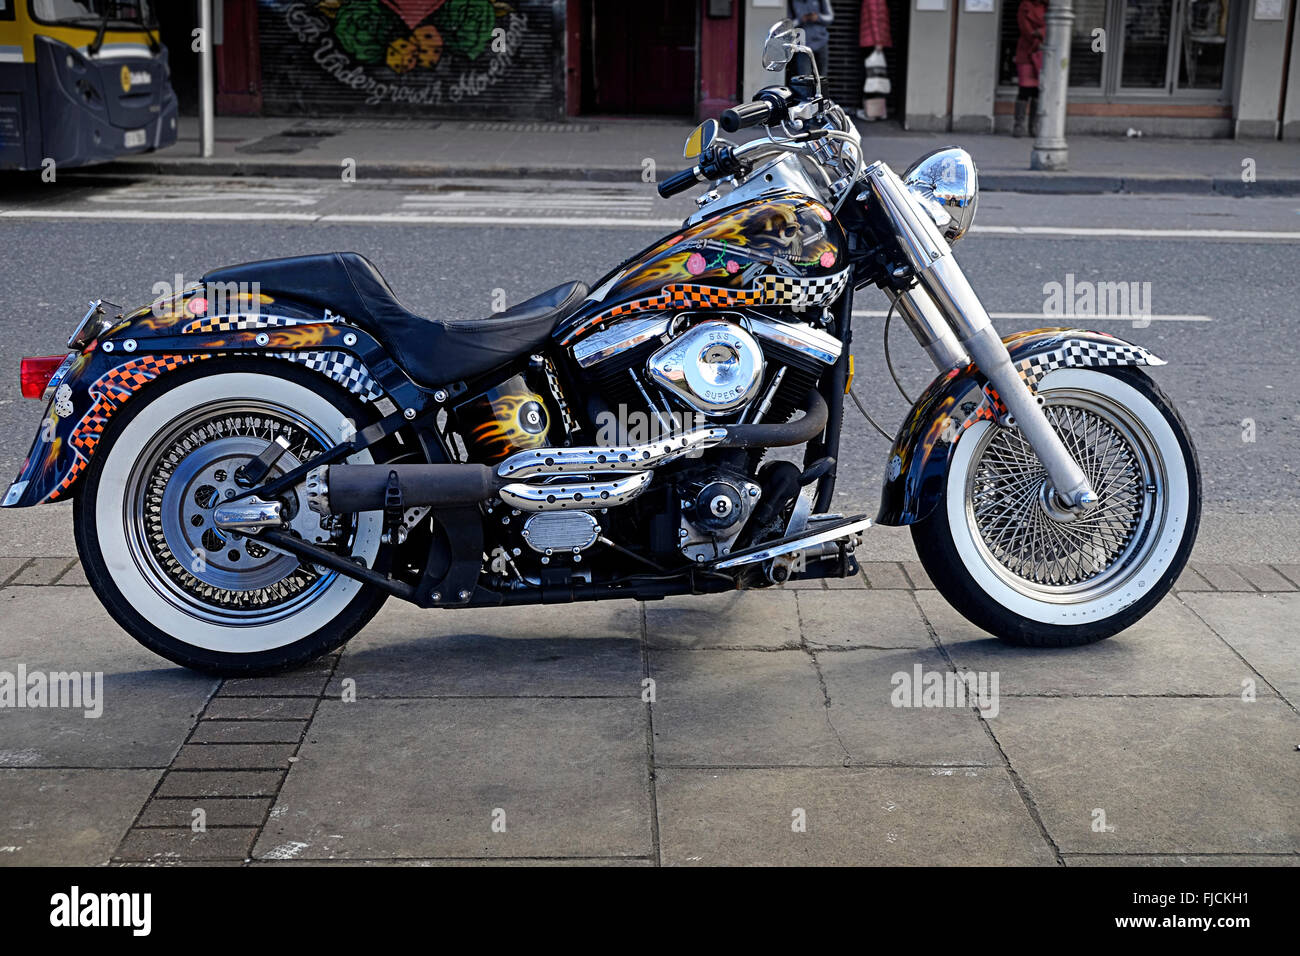 Stark individuelle Harley Davidson Motorrad in Dublin Irland. Stockfoto